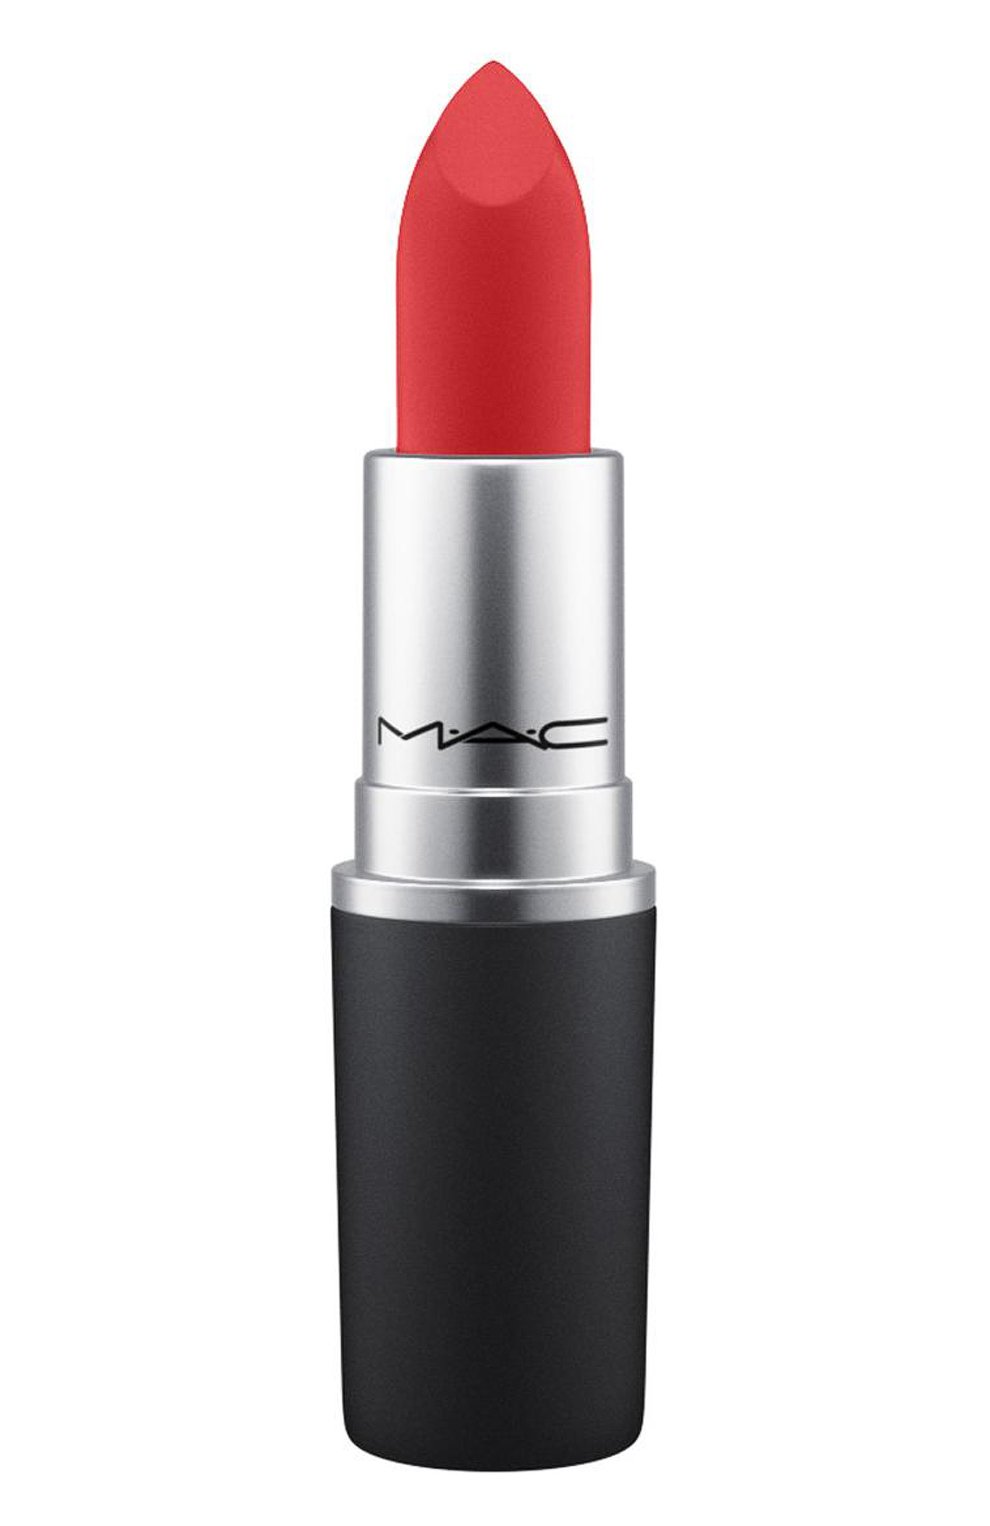 Губная помада Powder Kiss Lipstick оттенок Werk Werk Werk 3g Mac для женщин — купить за 0